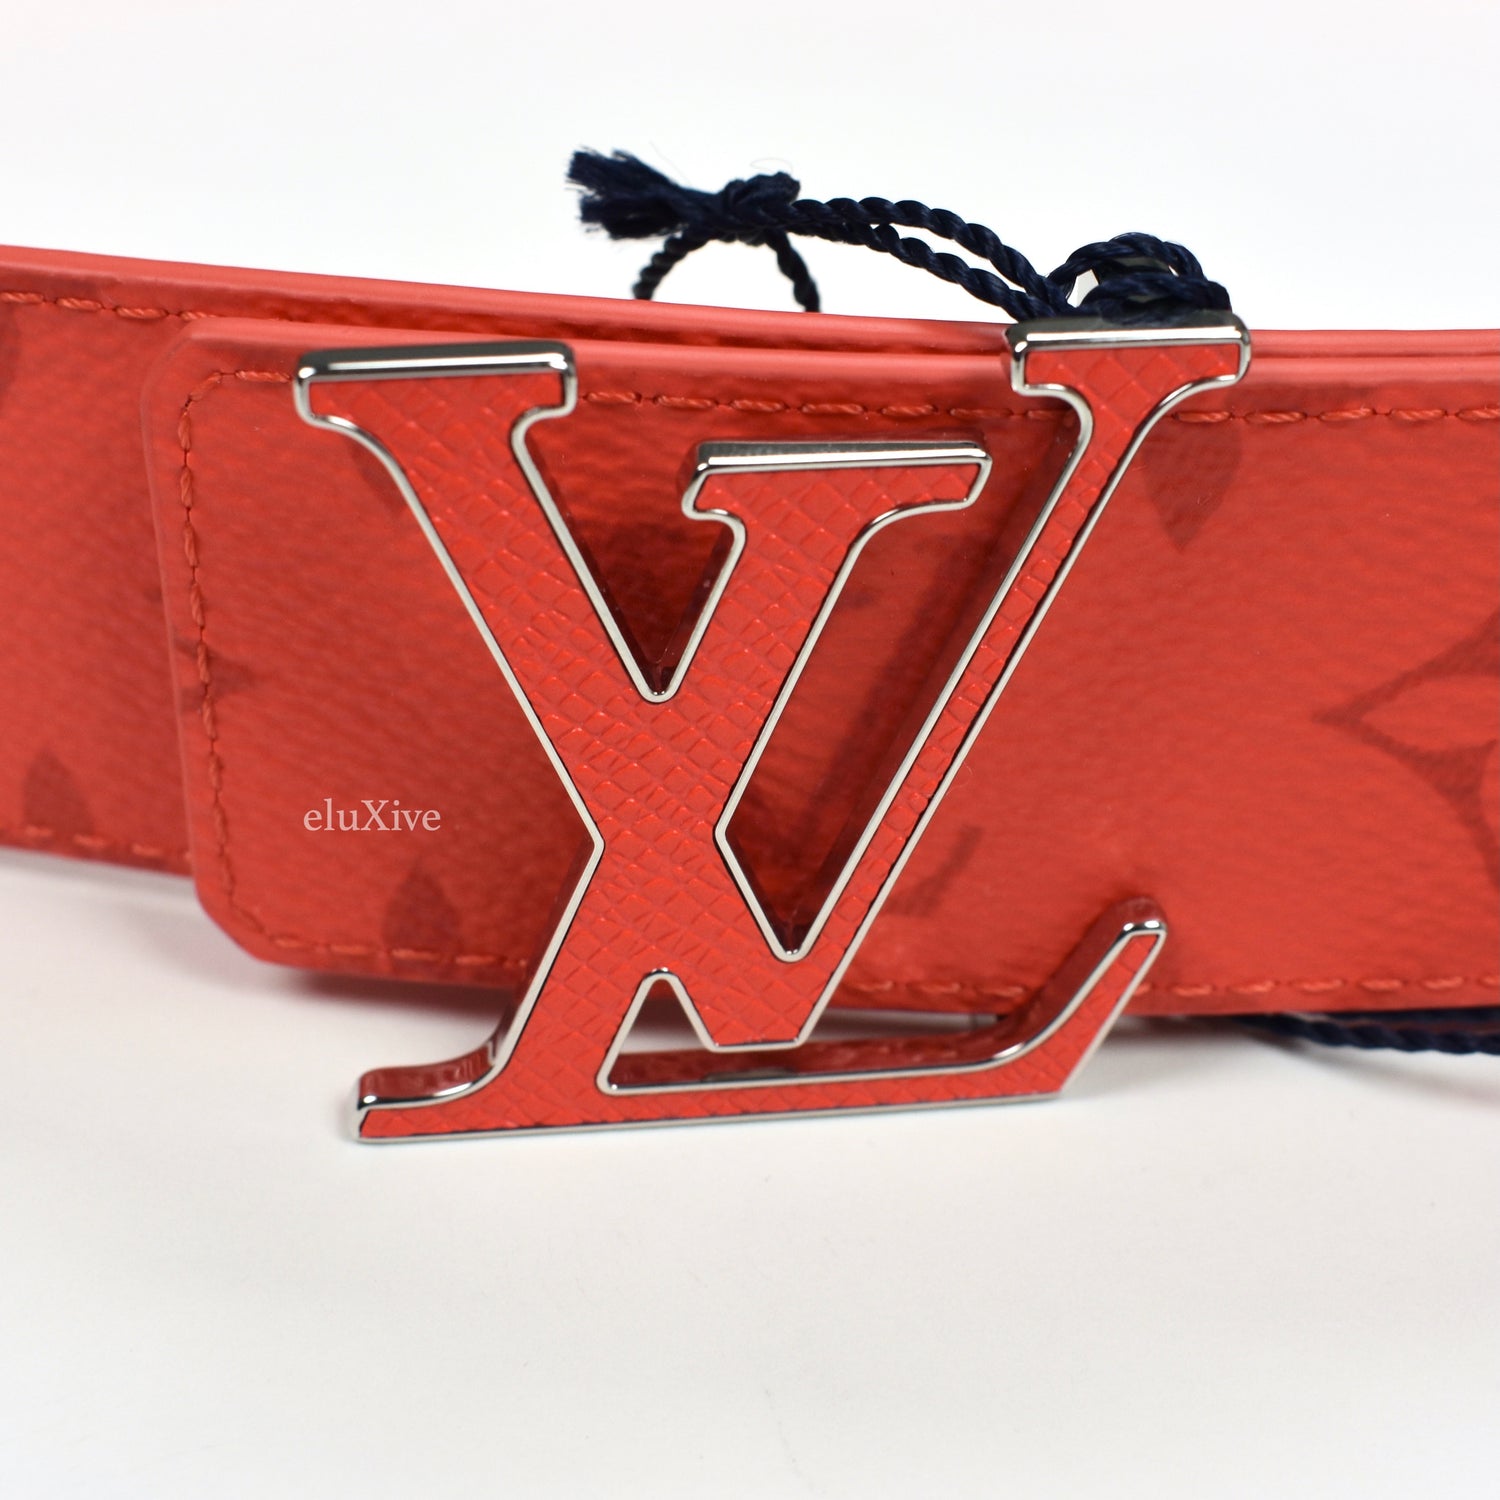 initiales belt red